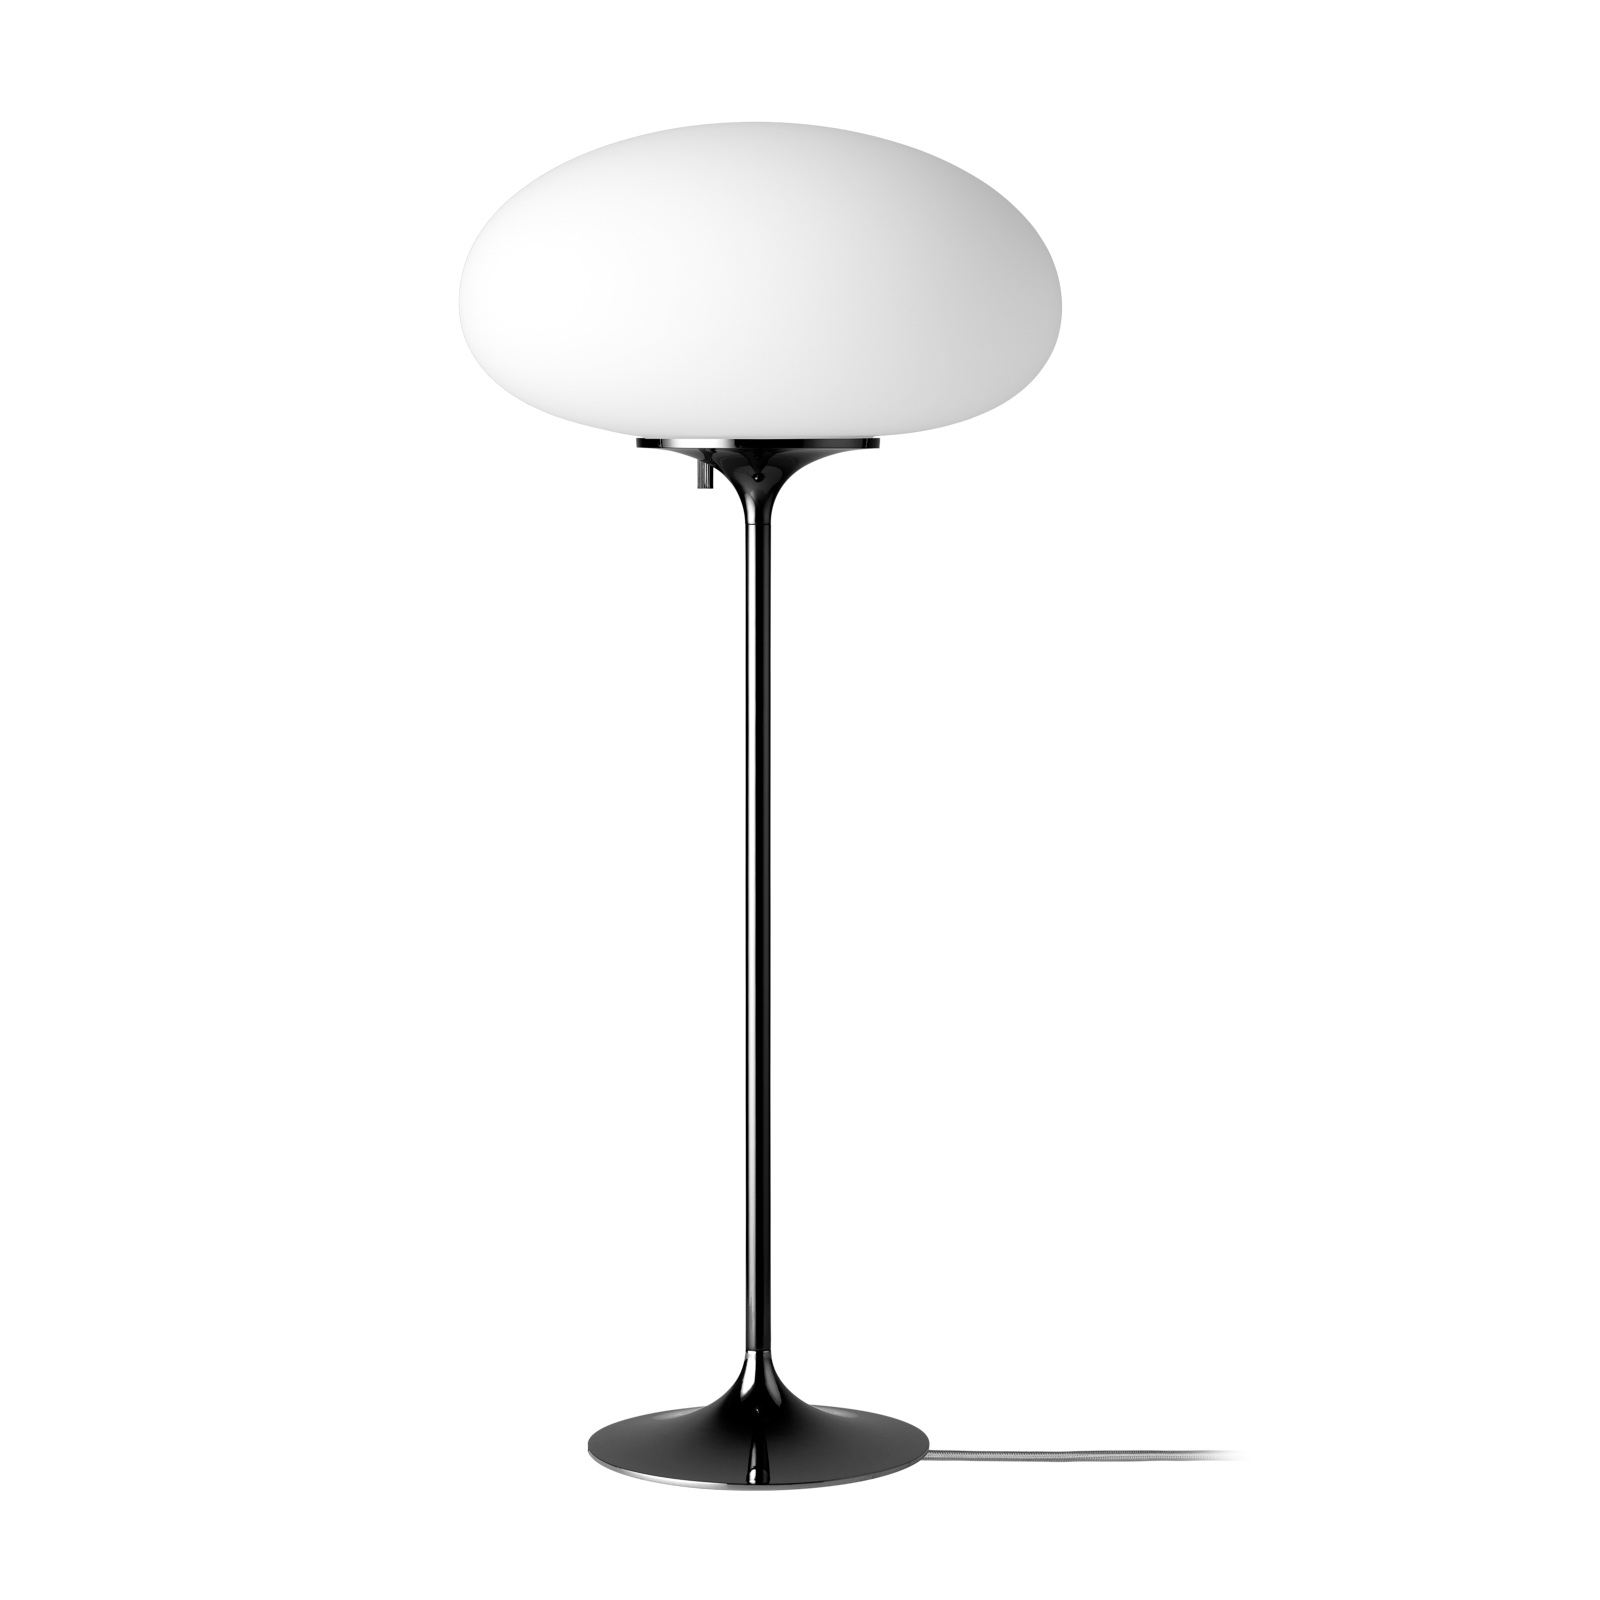 GUBI Stemlite stolná lampa, čierno-chrómová, 70 cm